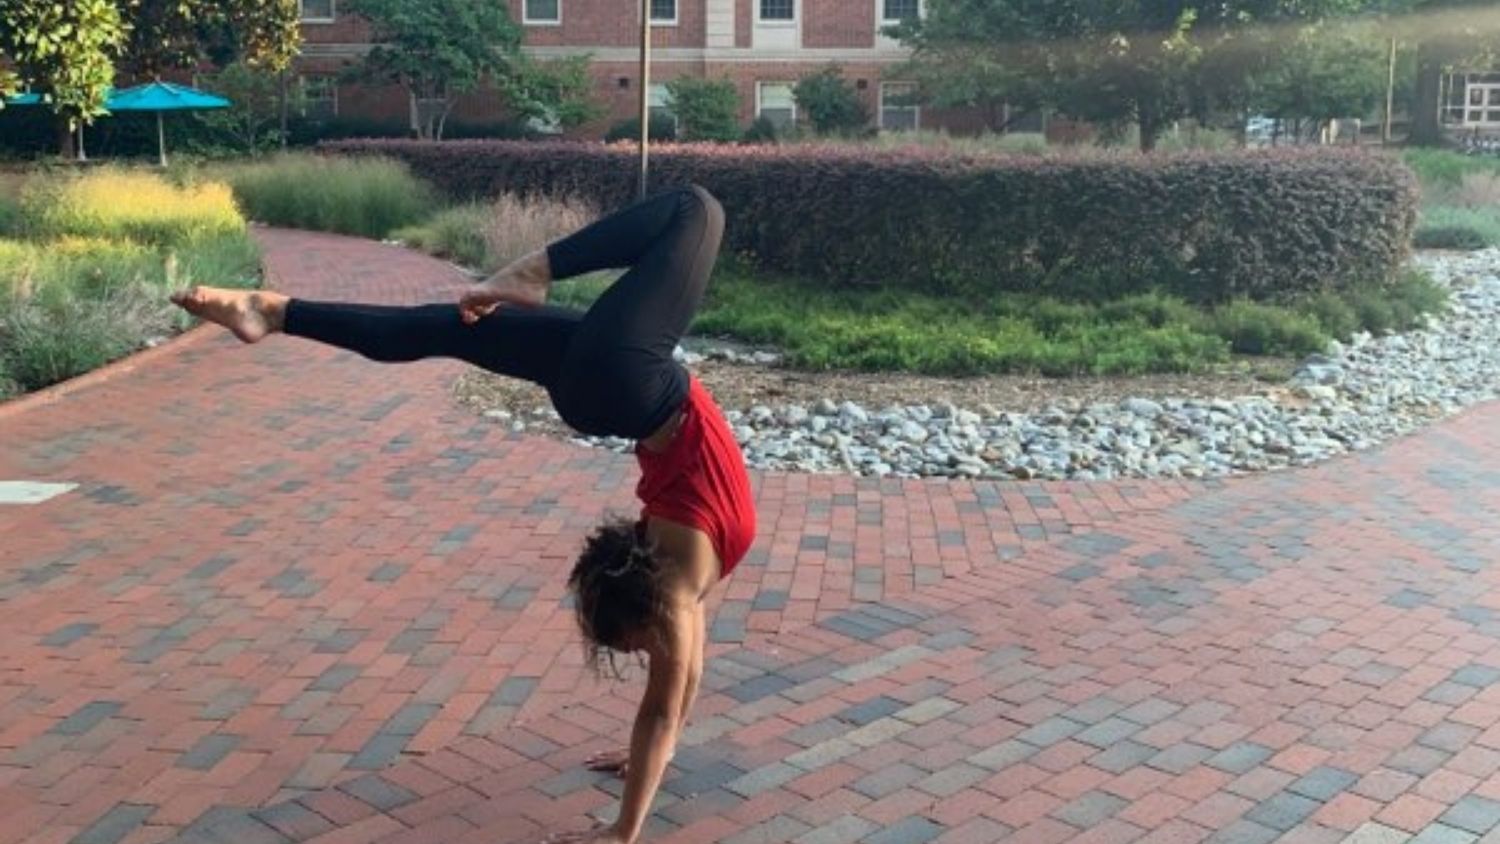 Carina doing Yoga at NC State - Carina Jordan - Student Spotlight - Forest Biomaterials NC State University